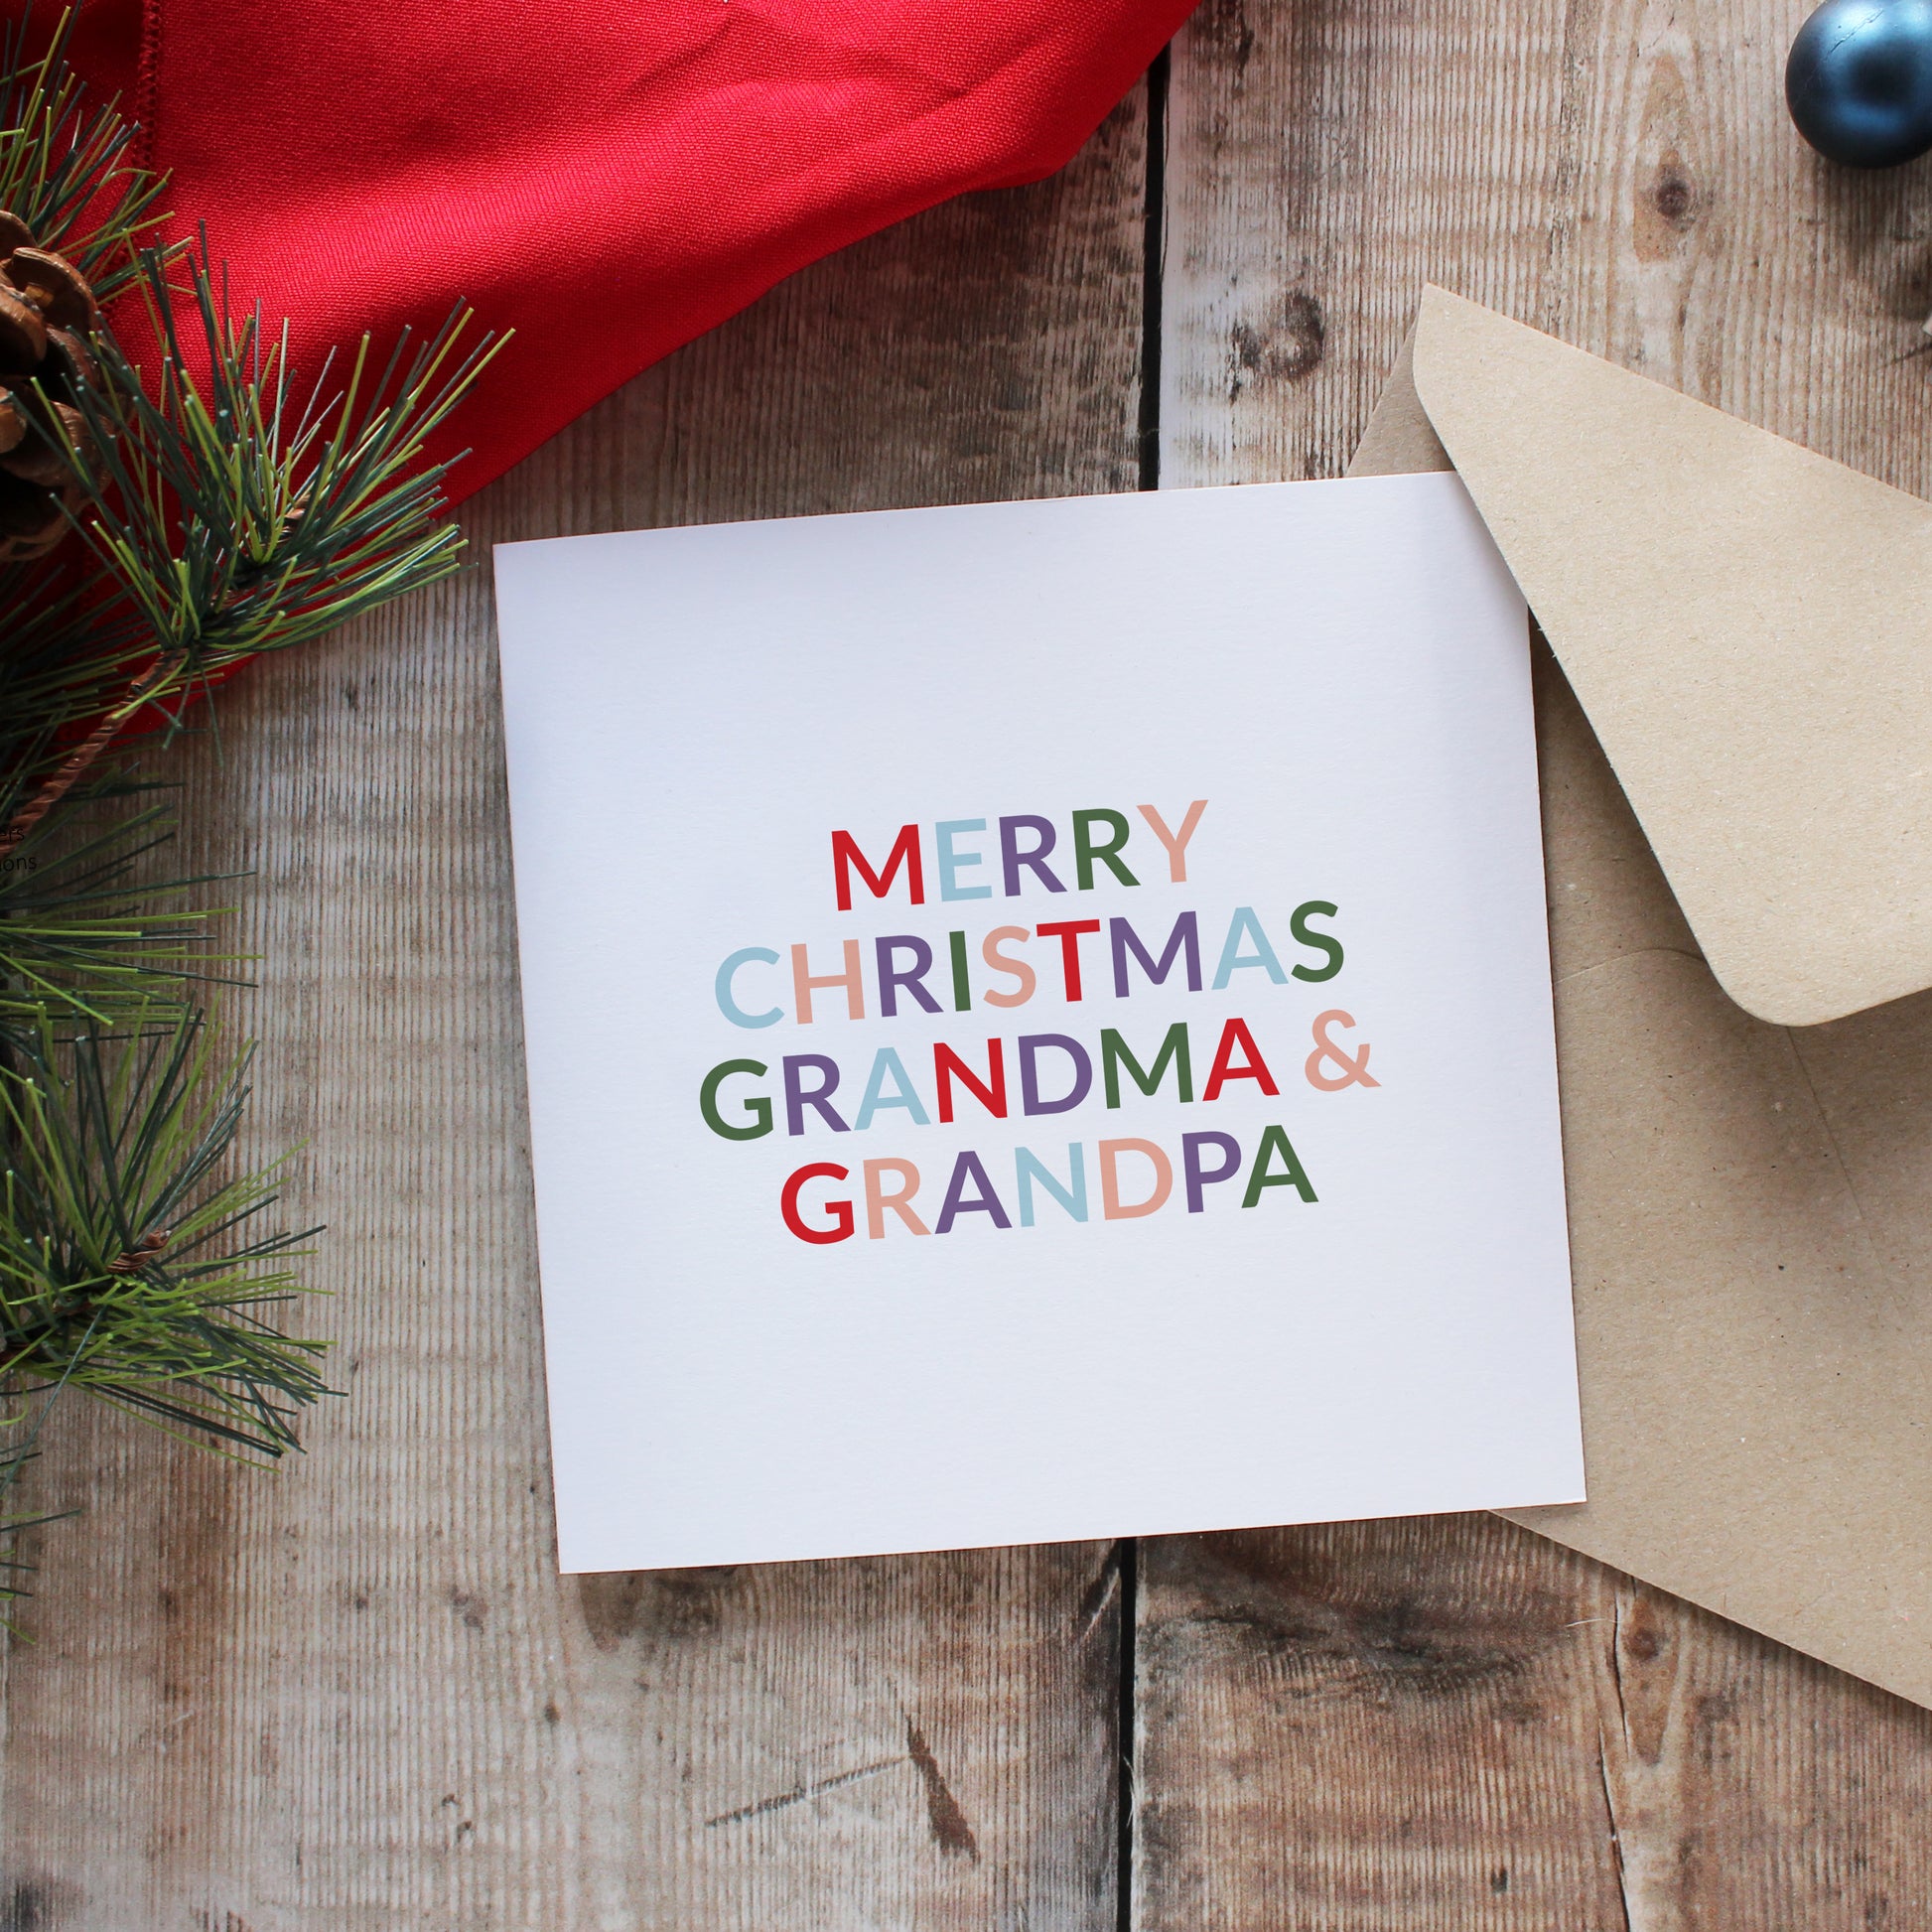 Merry Christmas grandma and grandpa Christmas card from Purple Tree Designs